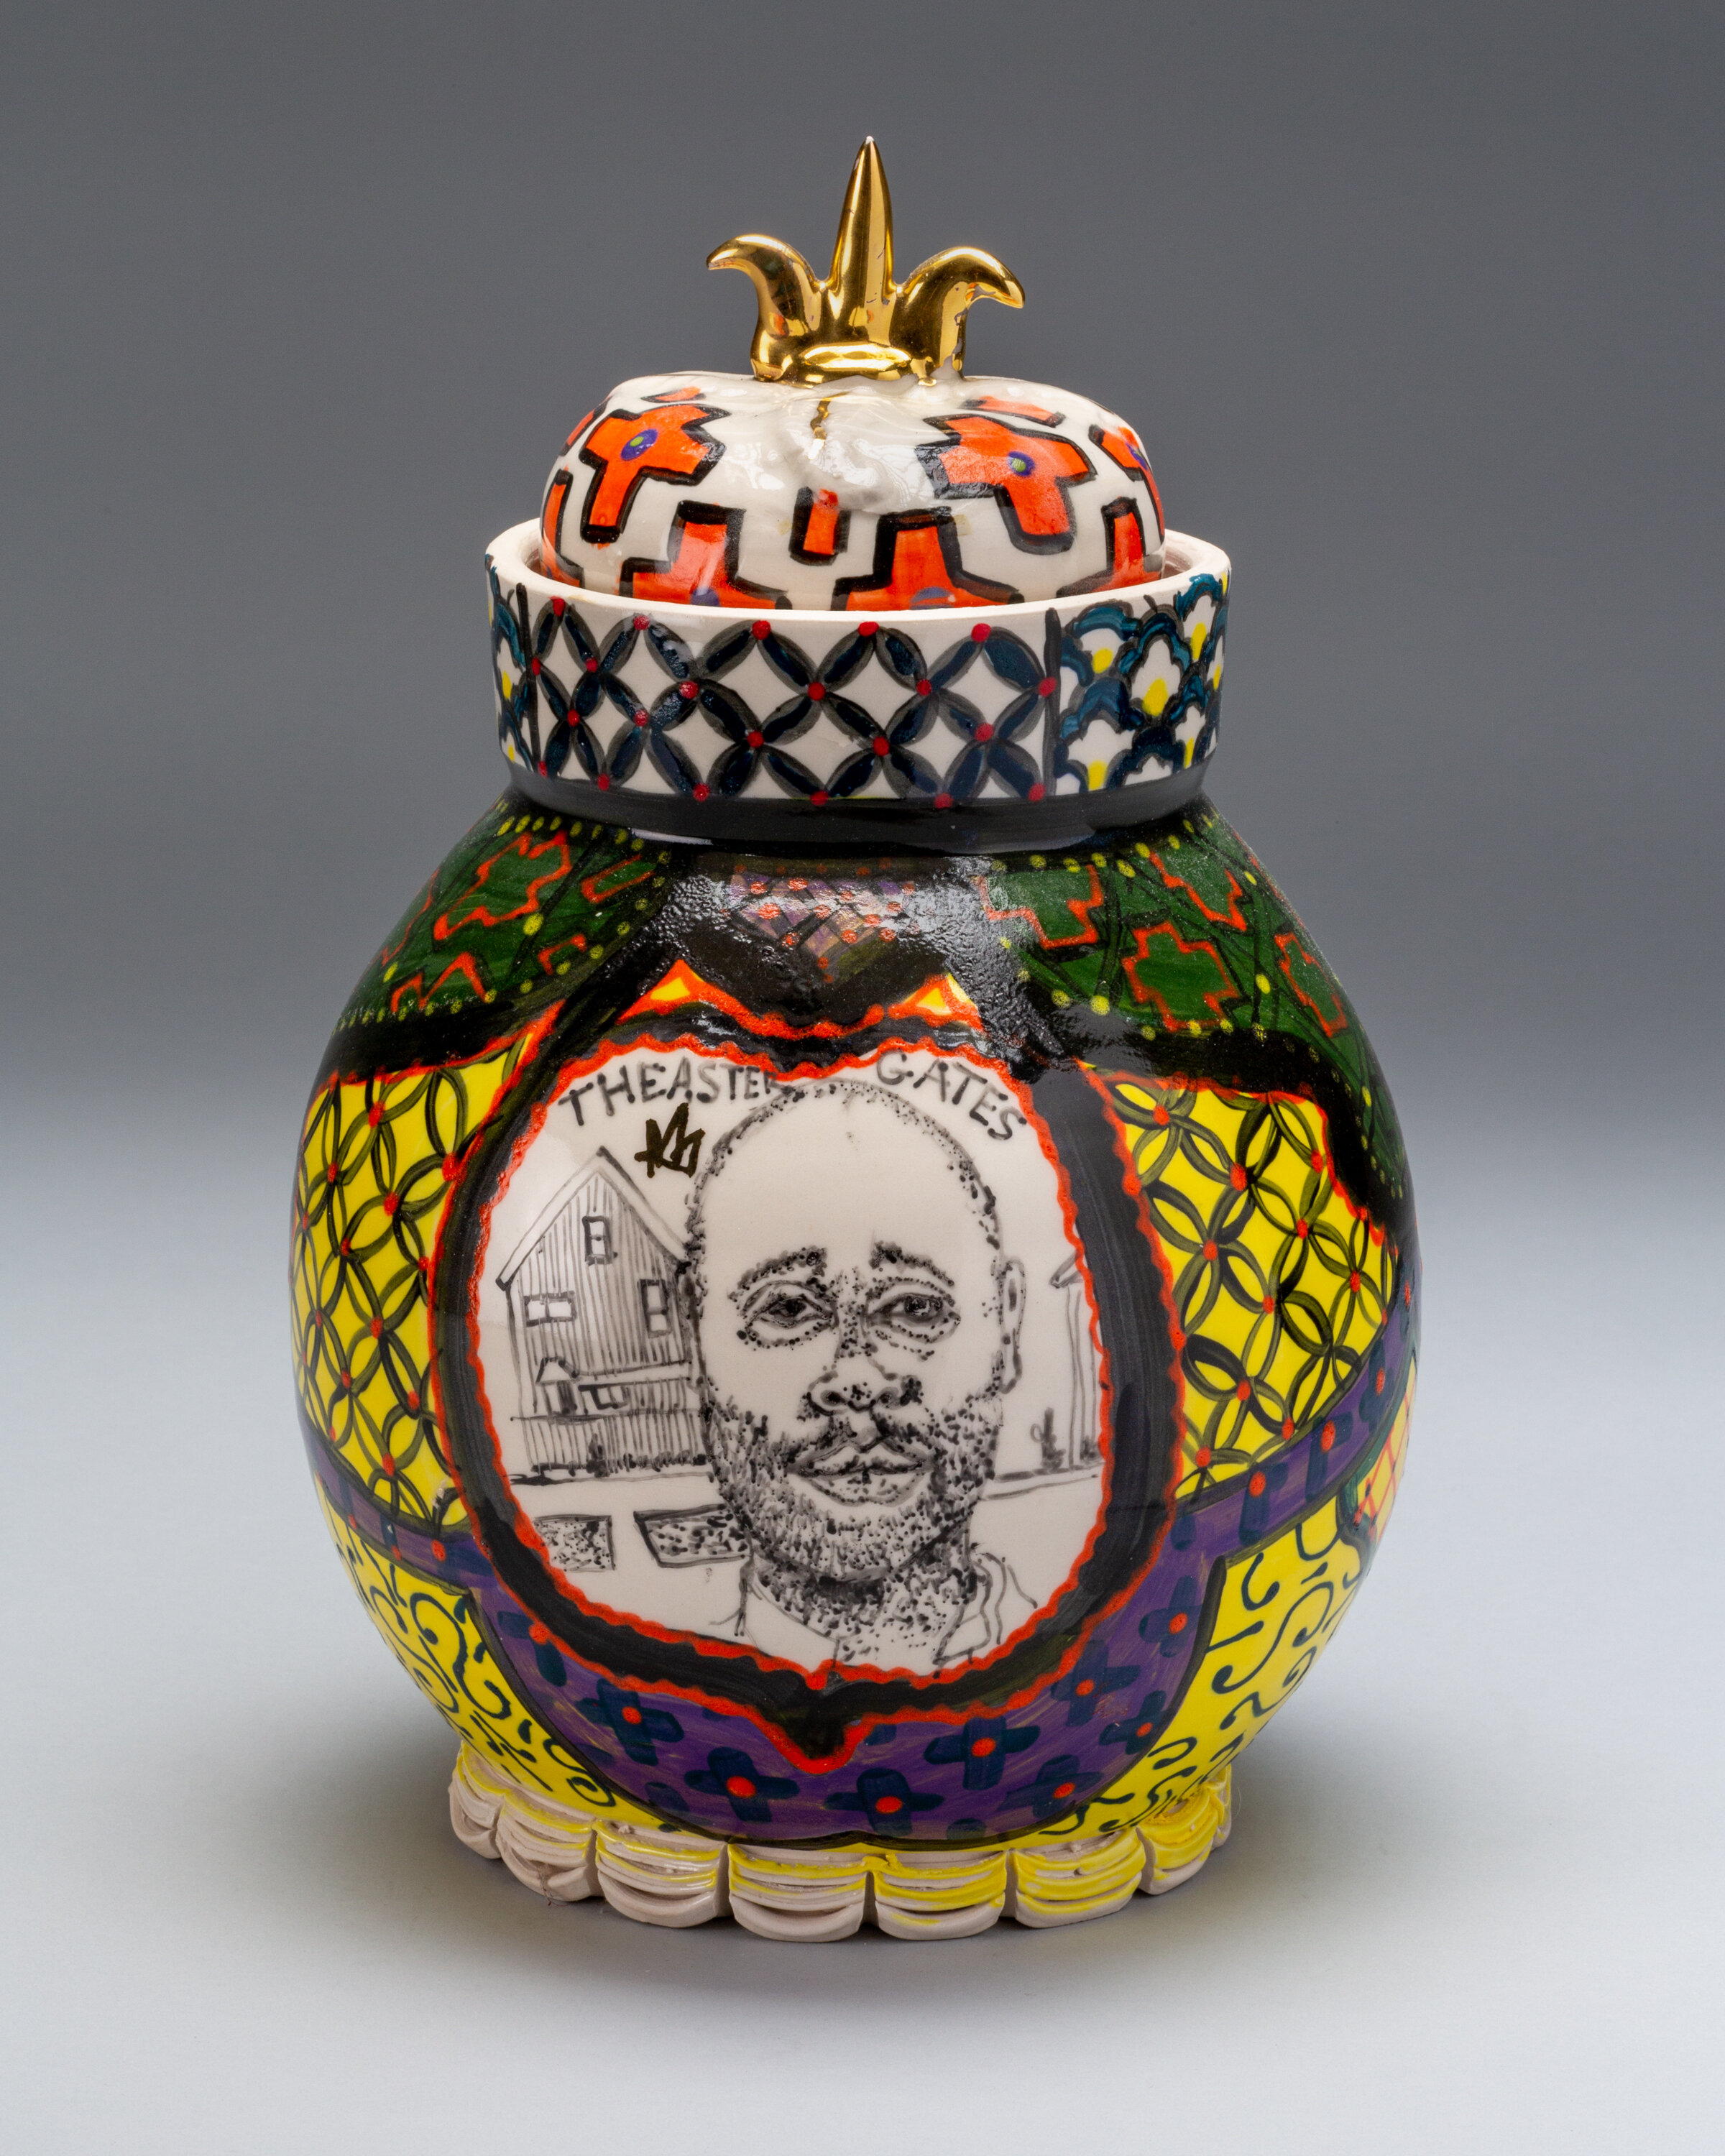  Roberto Lugo (American, b. 1981), Covered Jar: Theaster Gates and Jesse Williams Portraits, 2016, porcelain;  Promised Gift of E. John Bullard 